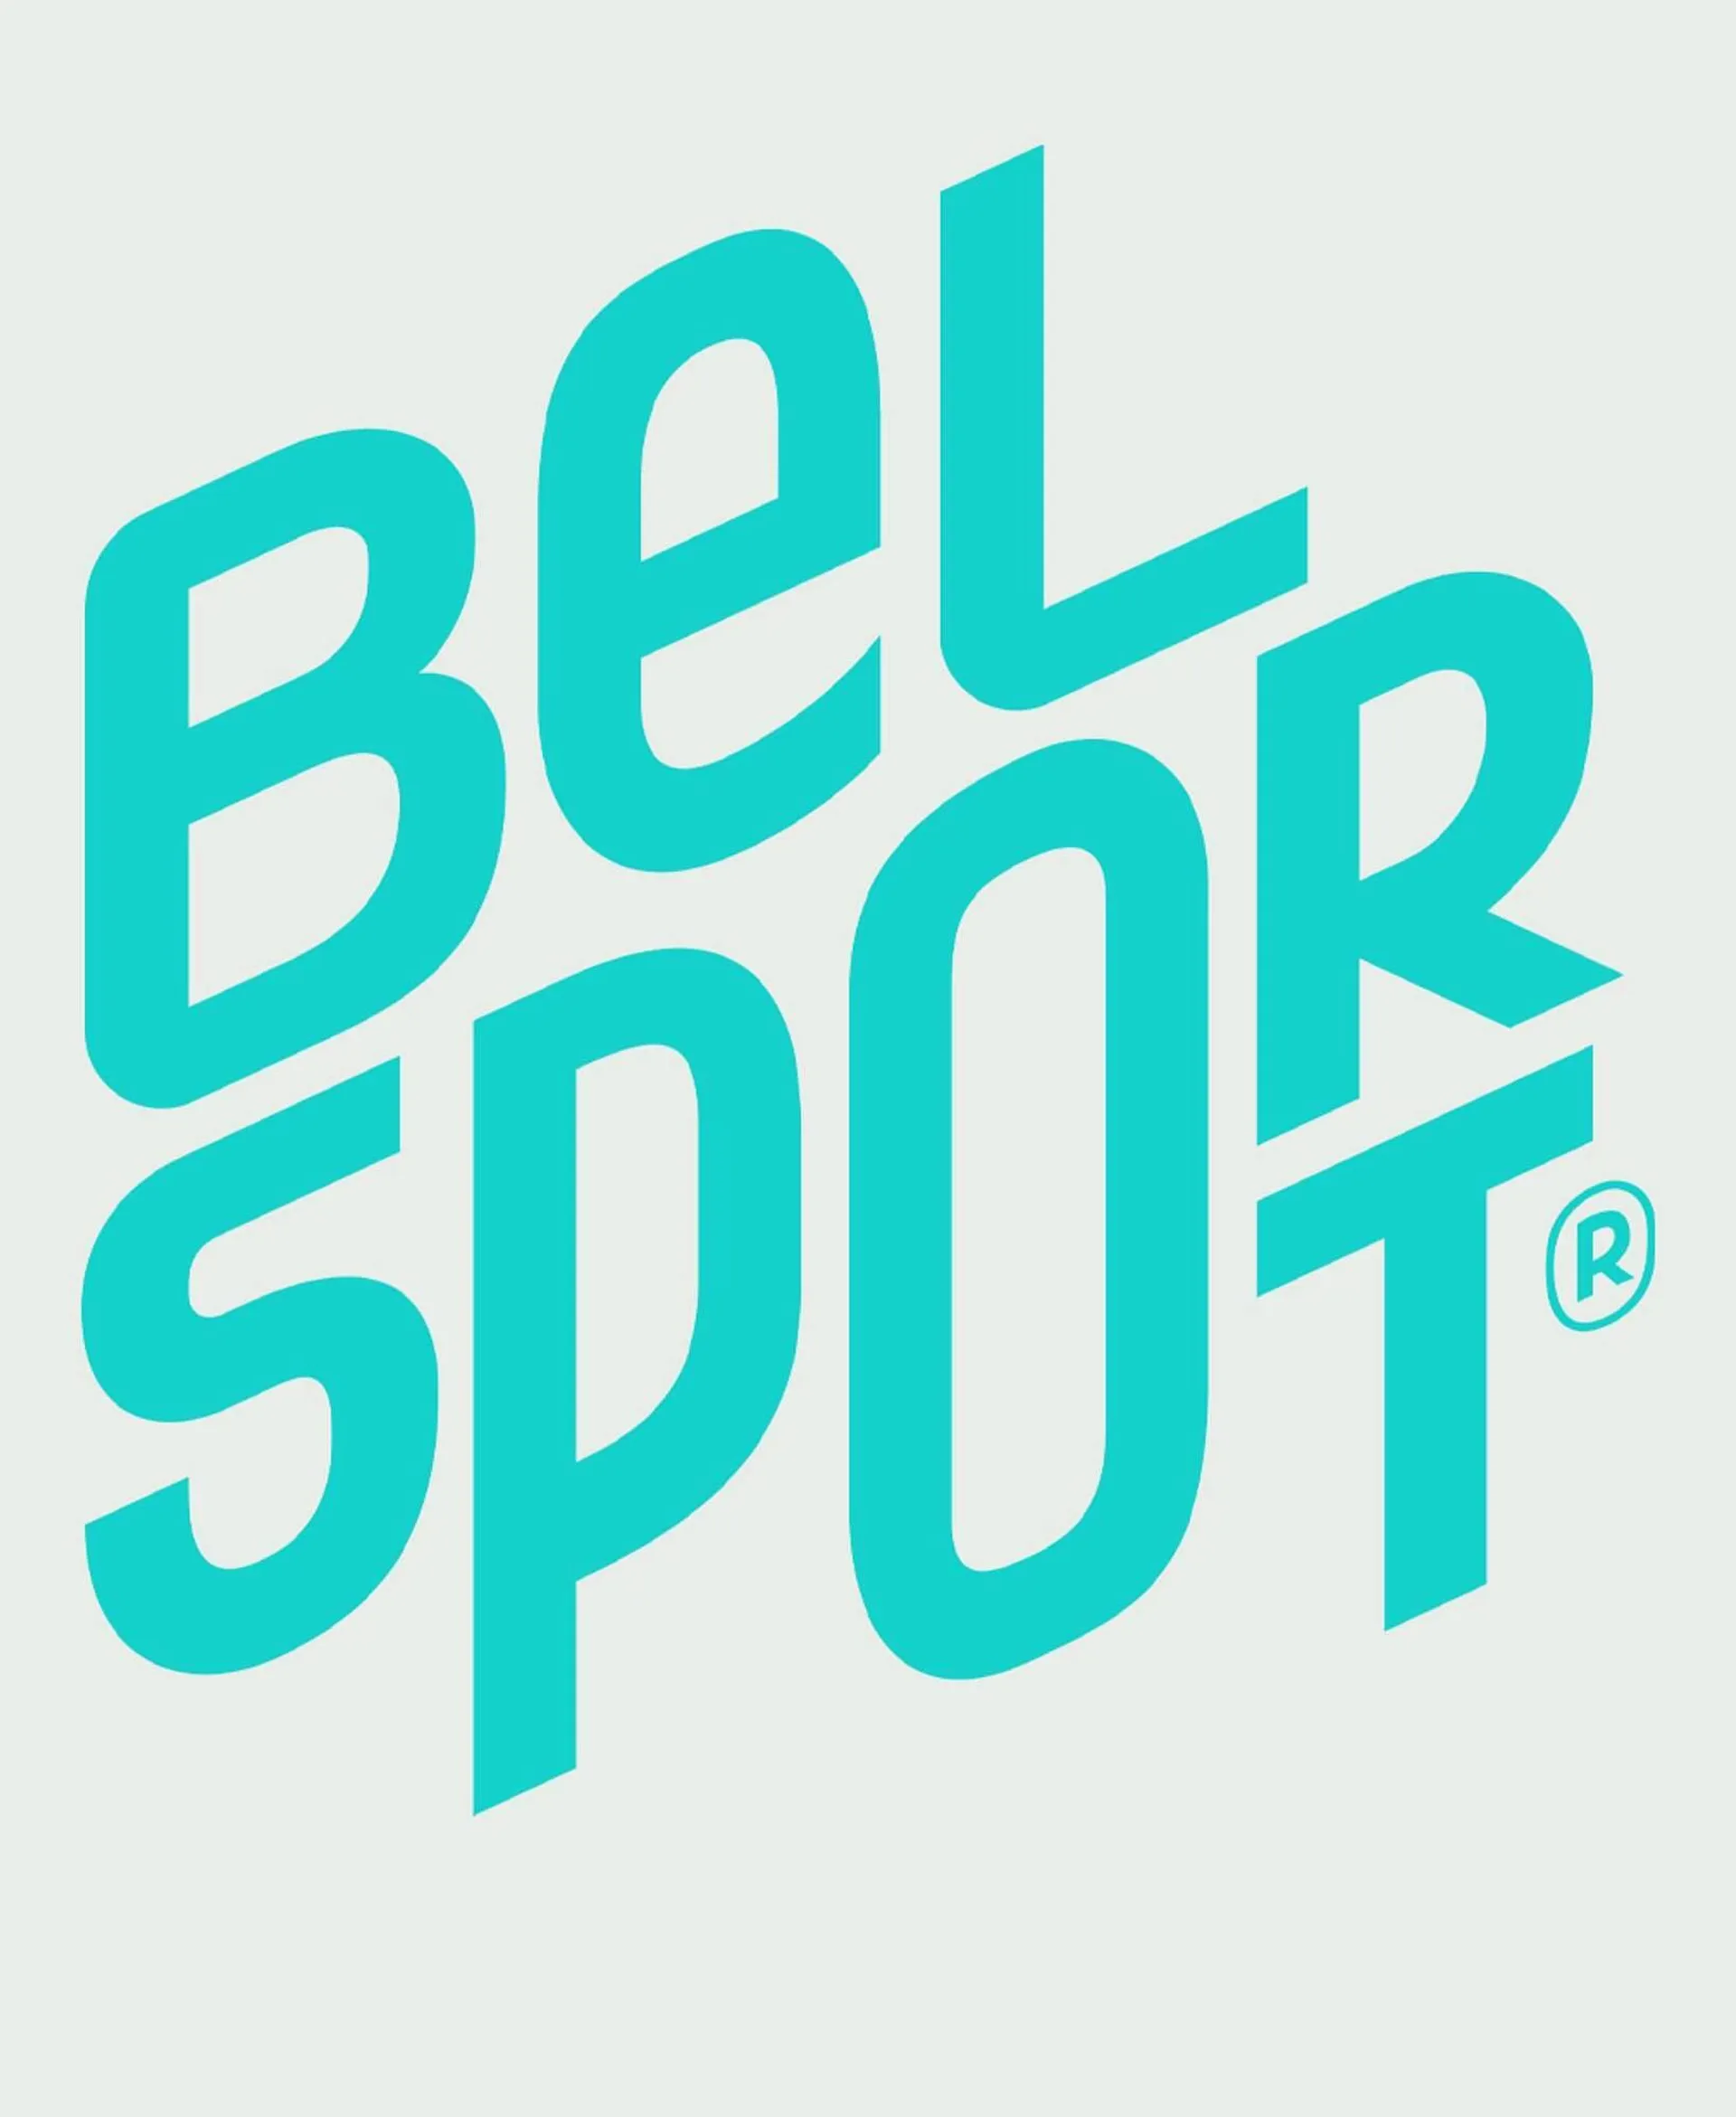 Catálogo Belsport - 5